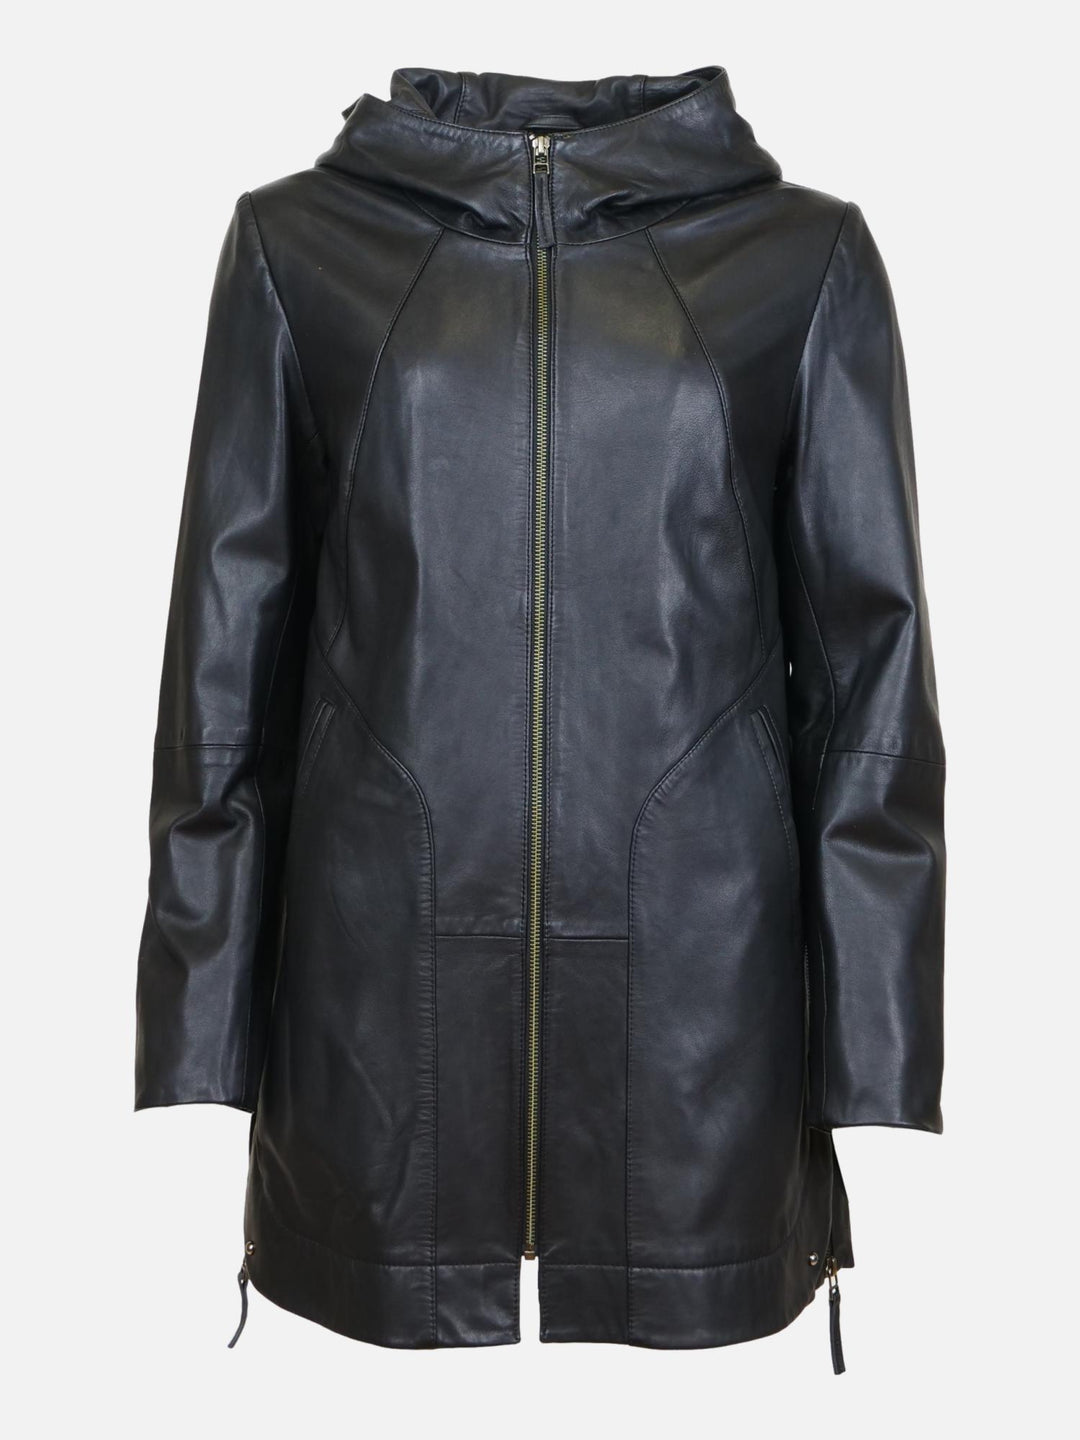 Sophia - Lamb Boss Leather - Jacket - Women - Black